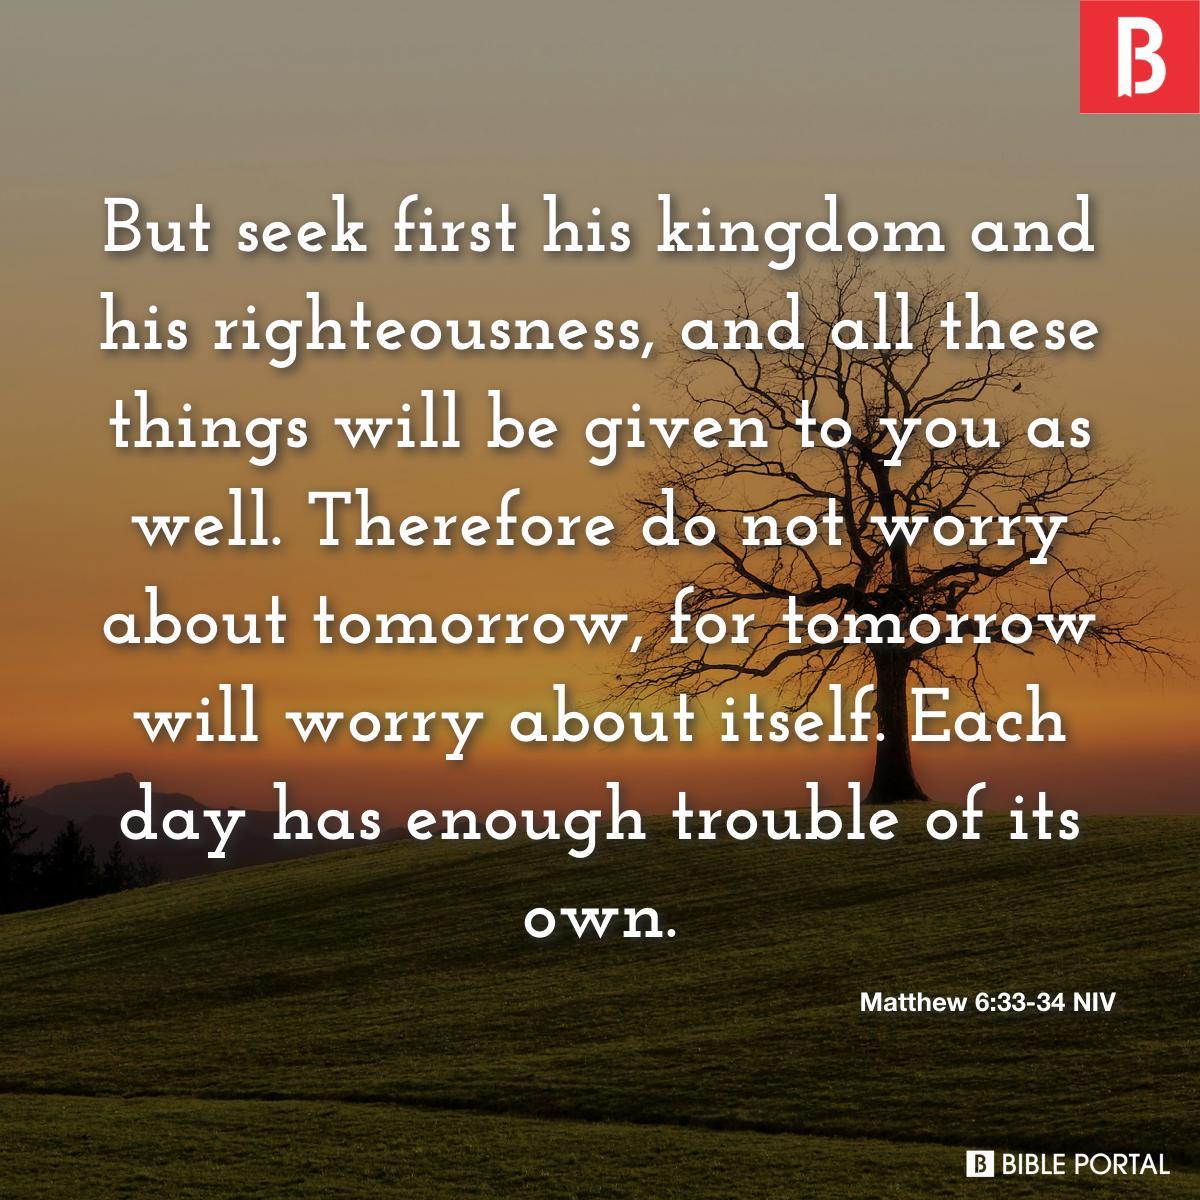 Matthew 6:33-34 NIV